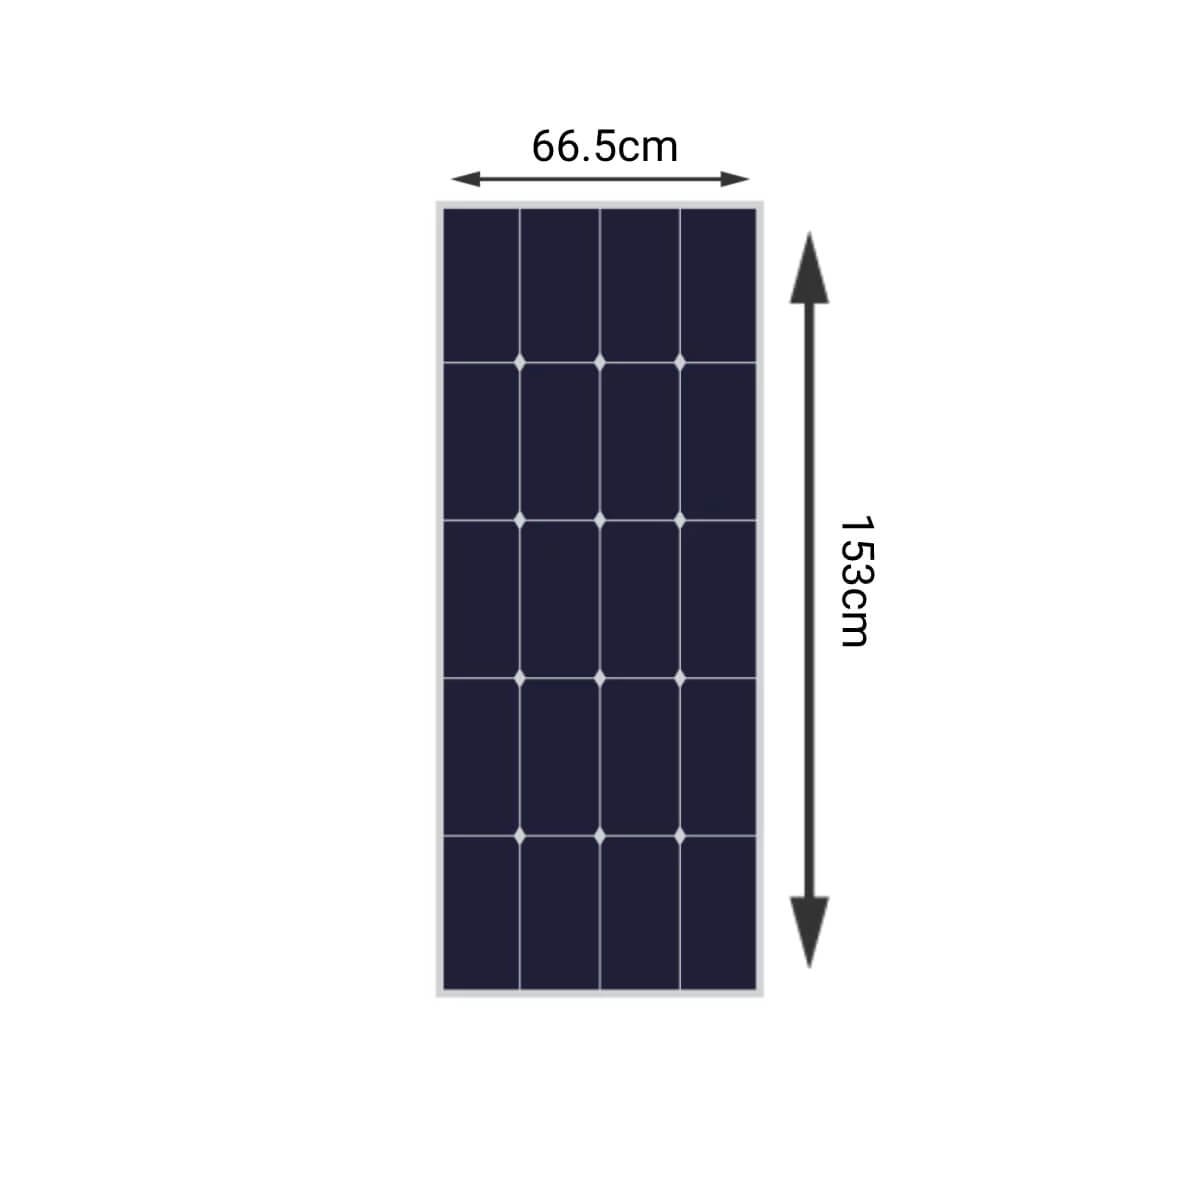 200W Flexible Solar Panel Kit – 1x 200W dimensions